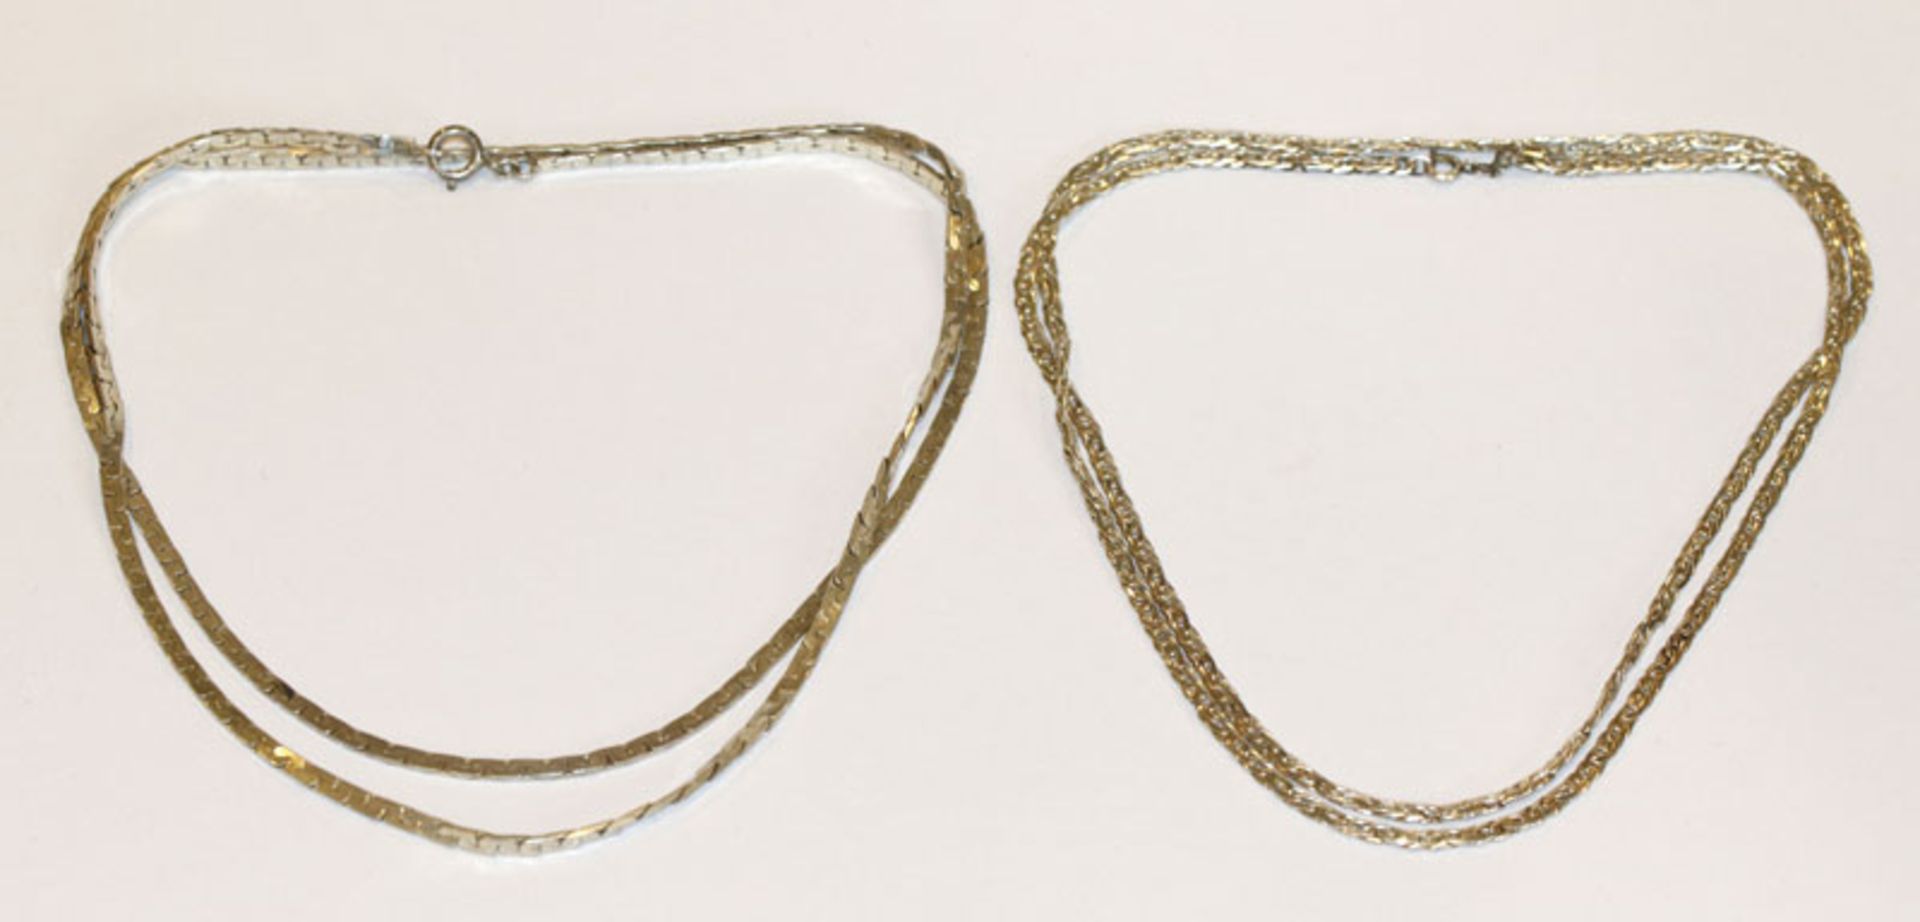 2 Silber Ketten, L 80/86 cm, zus. 60 gr.